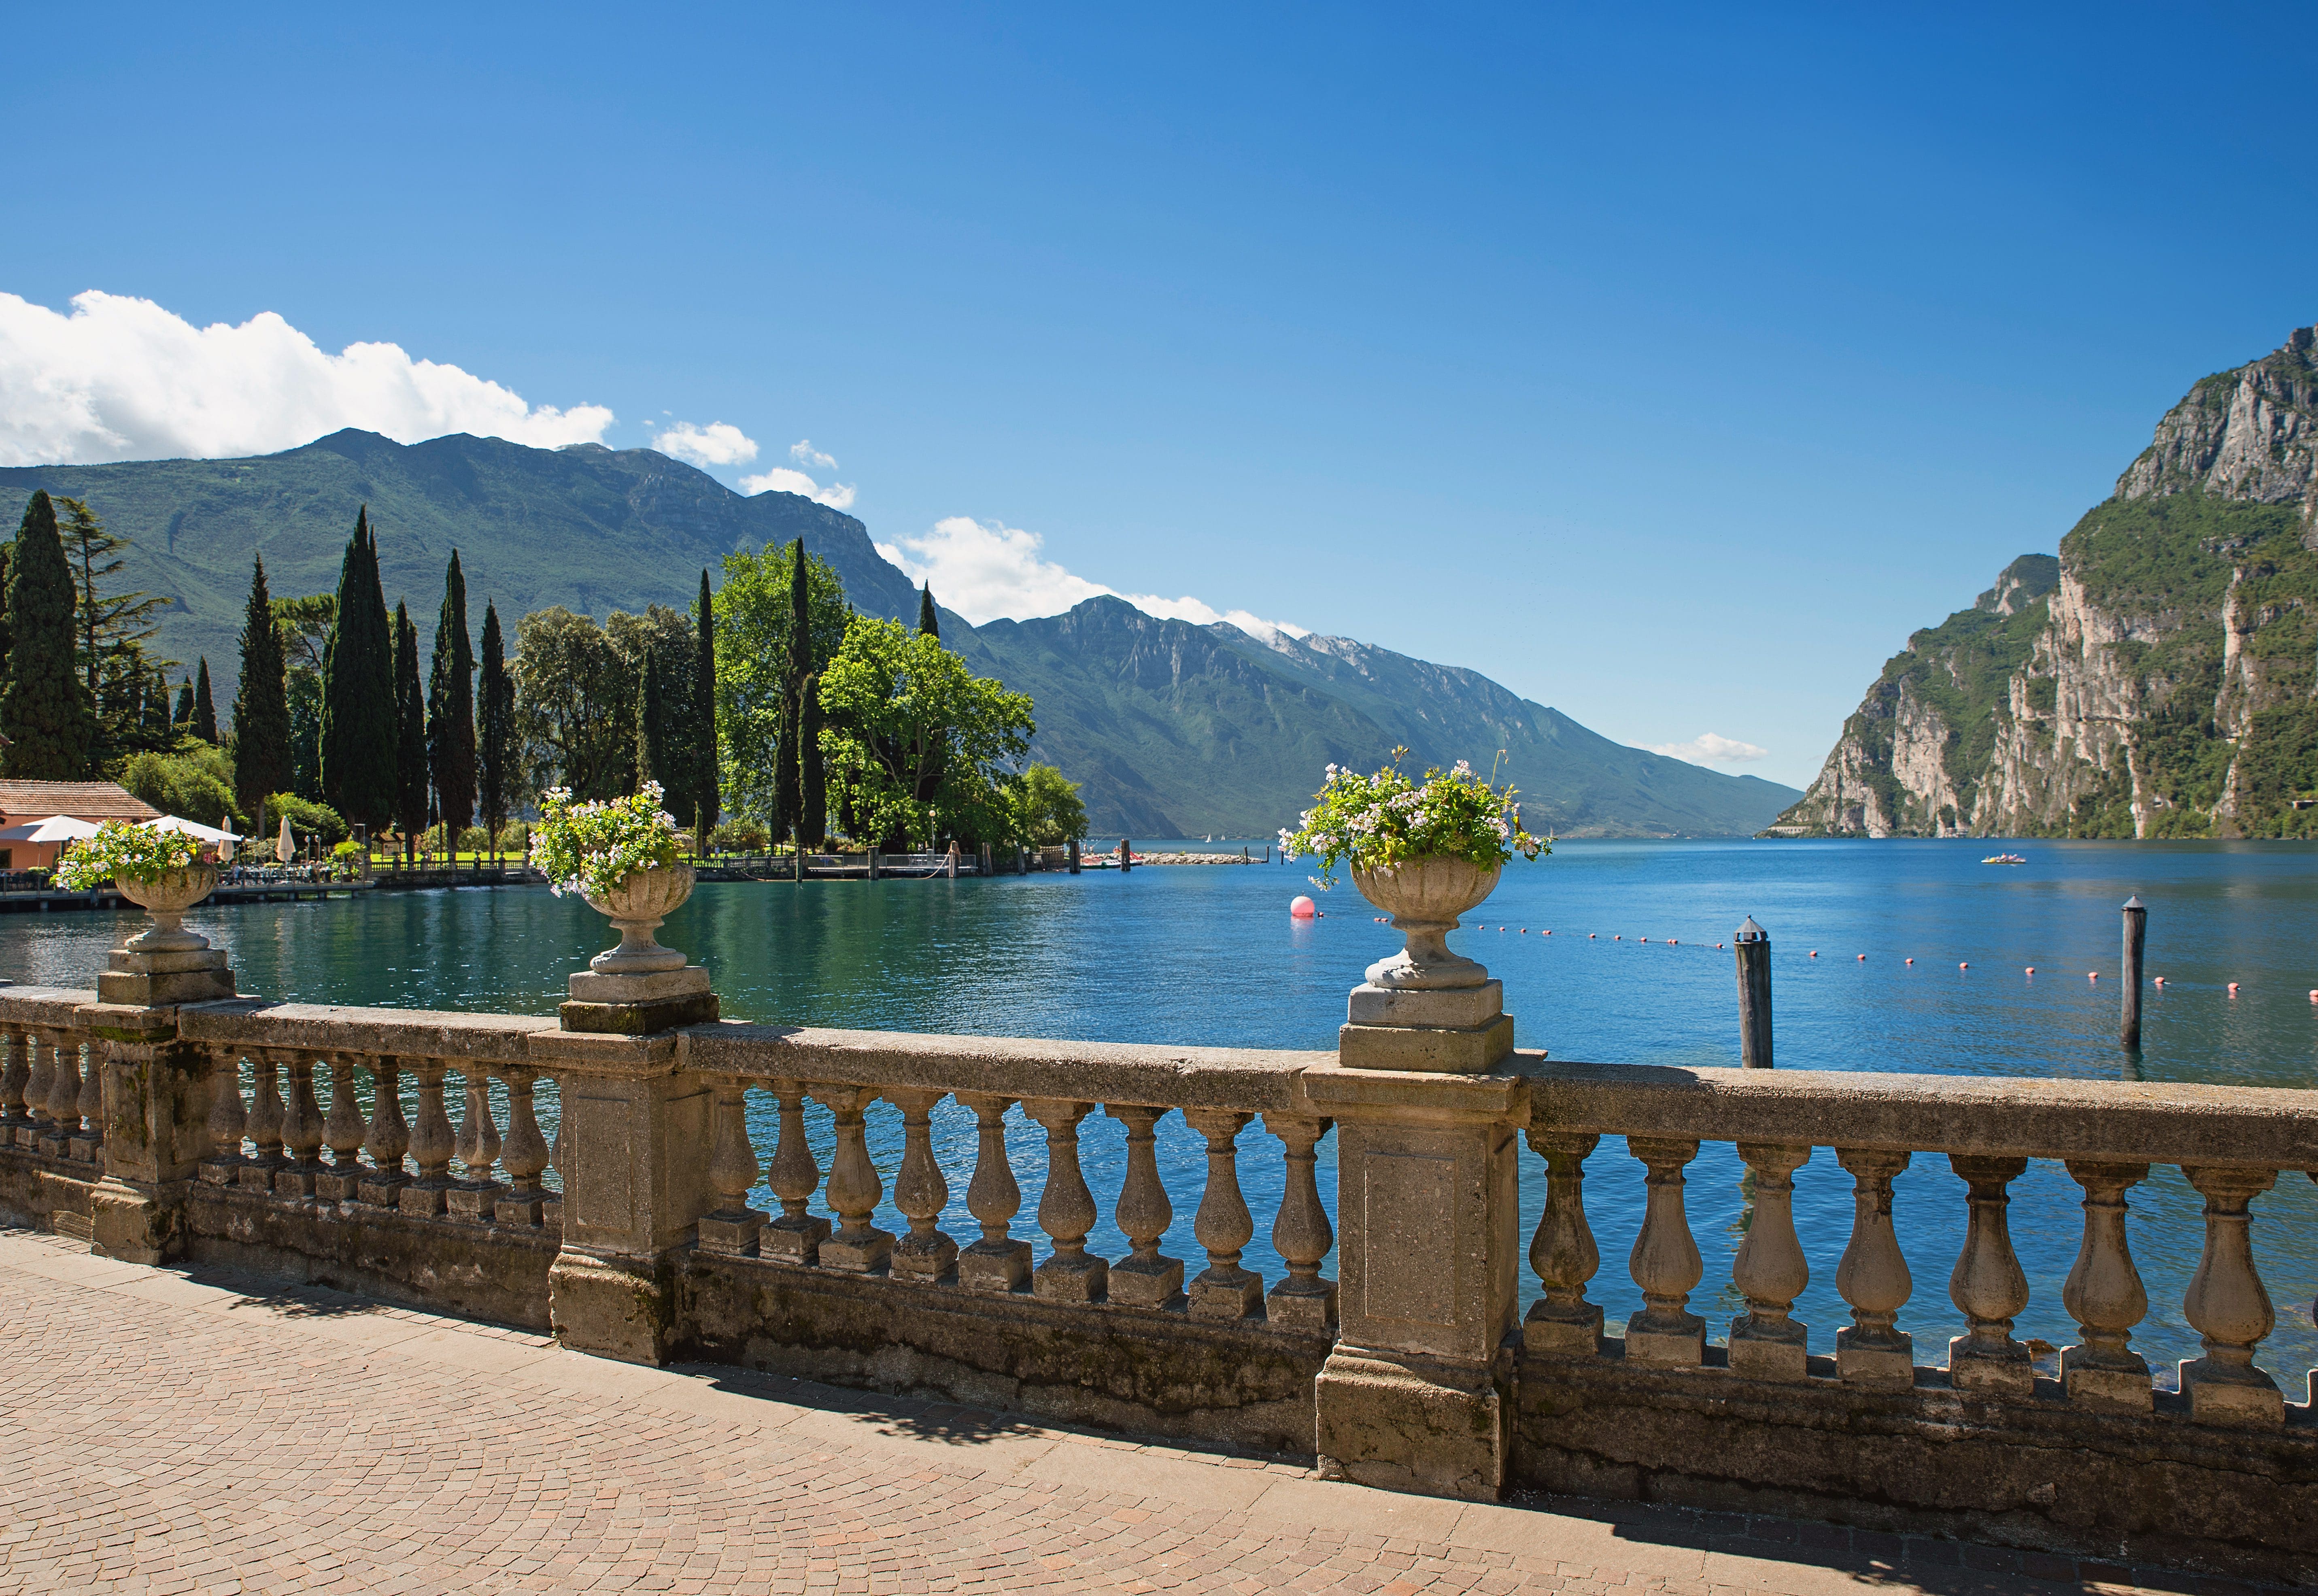 Road Trip Guide to Lago di Garda